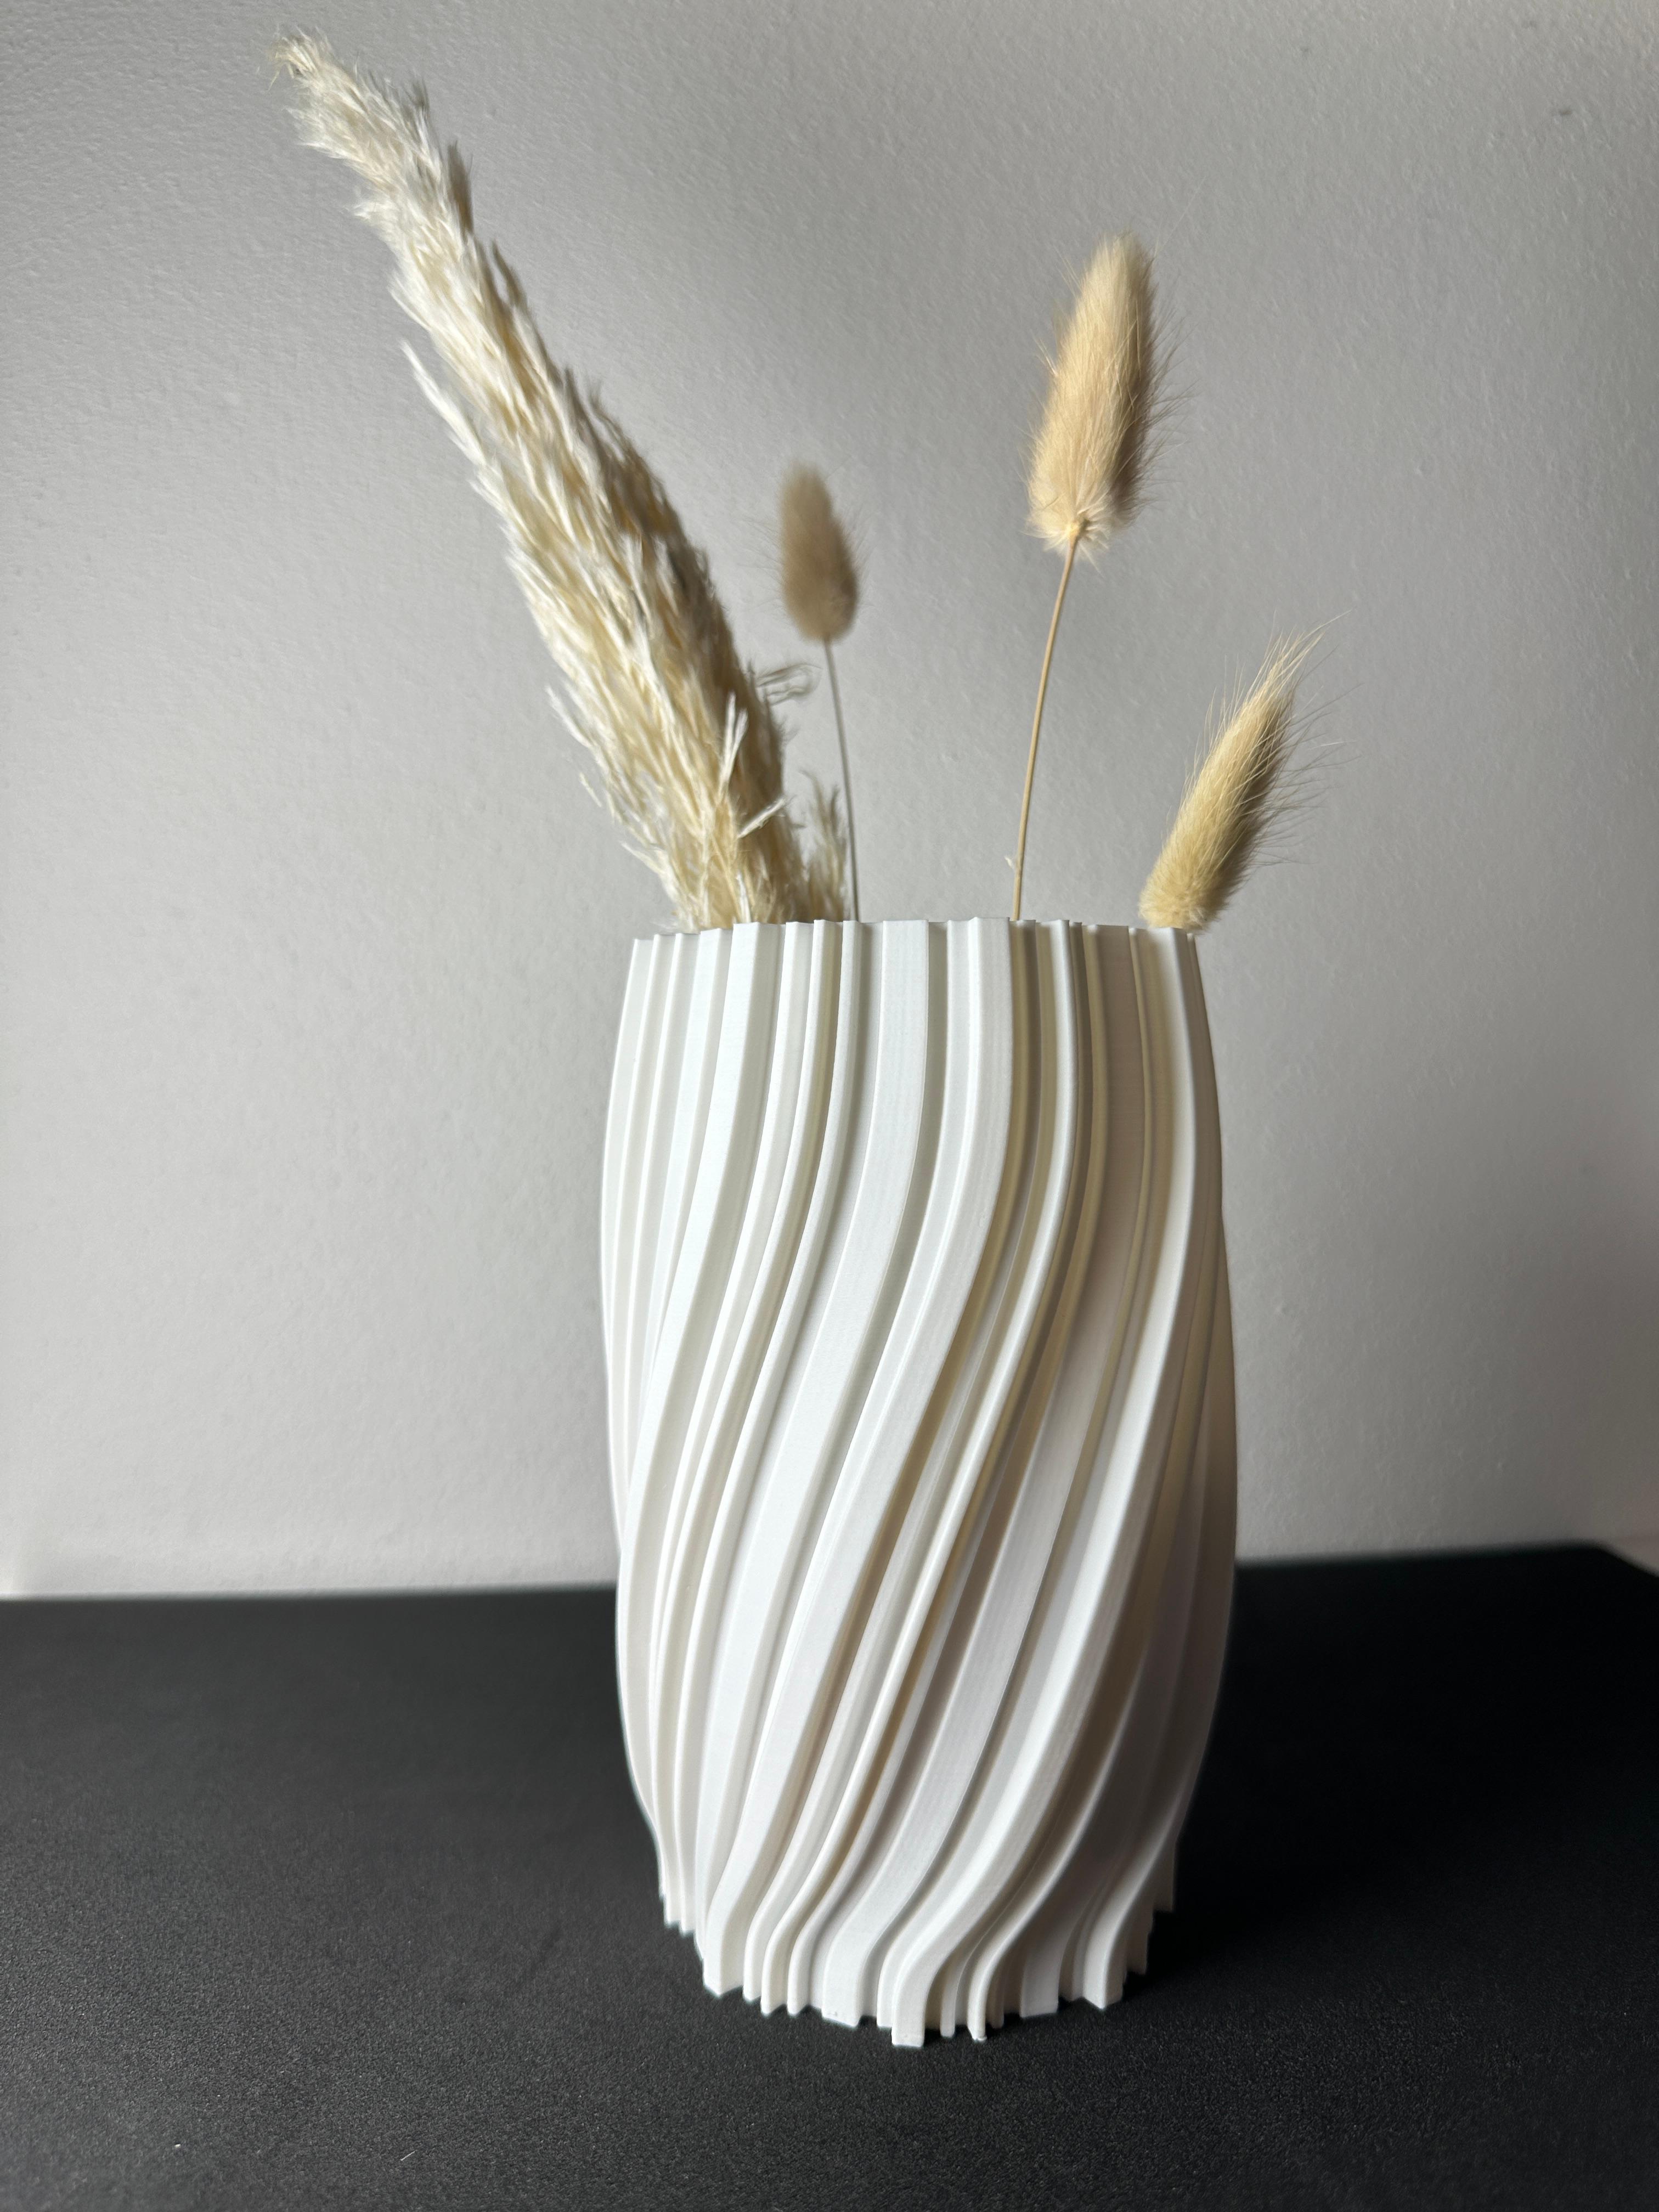 The Frasta - Botany Chic Vase Frasta - Transform the Ordinary 3d model